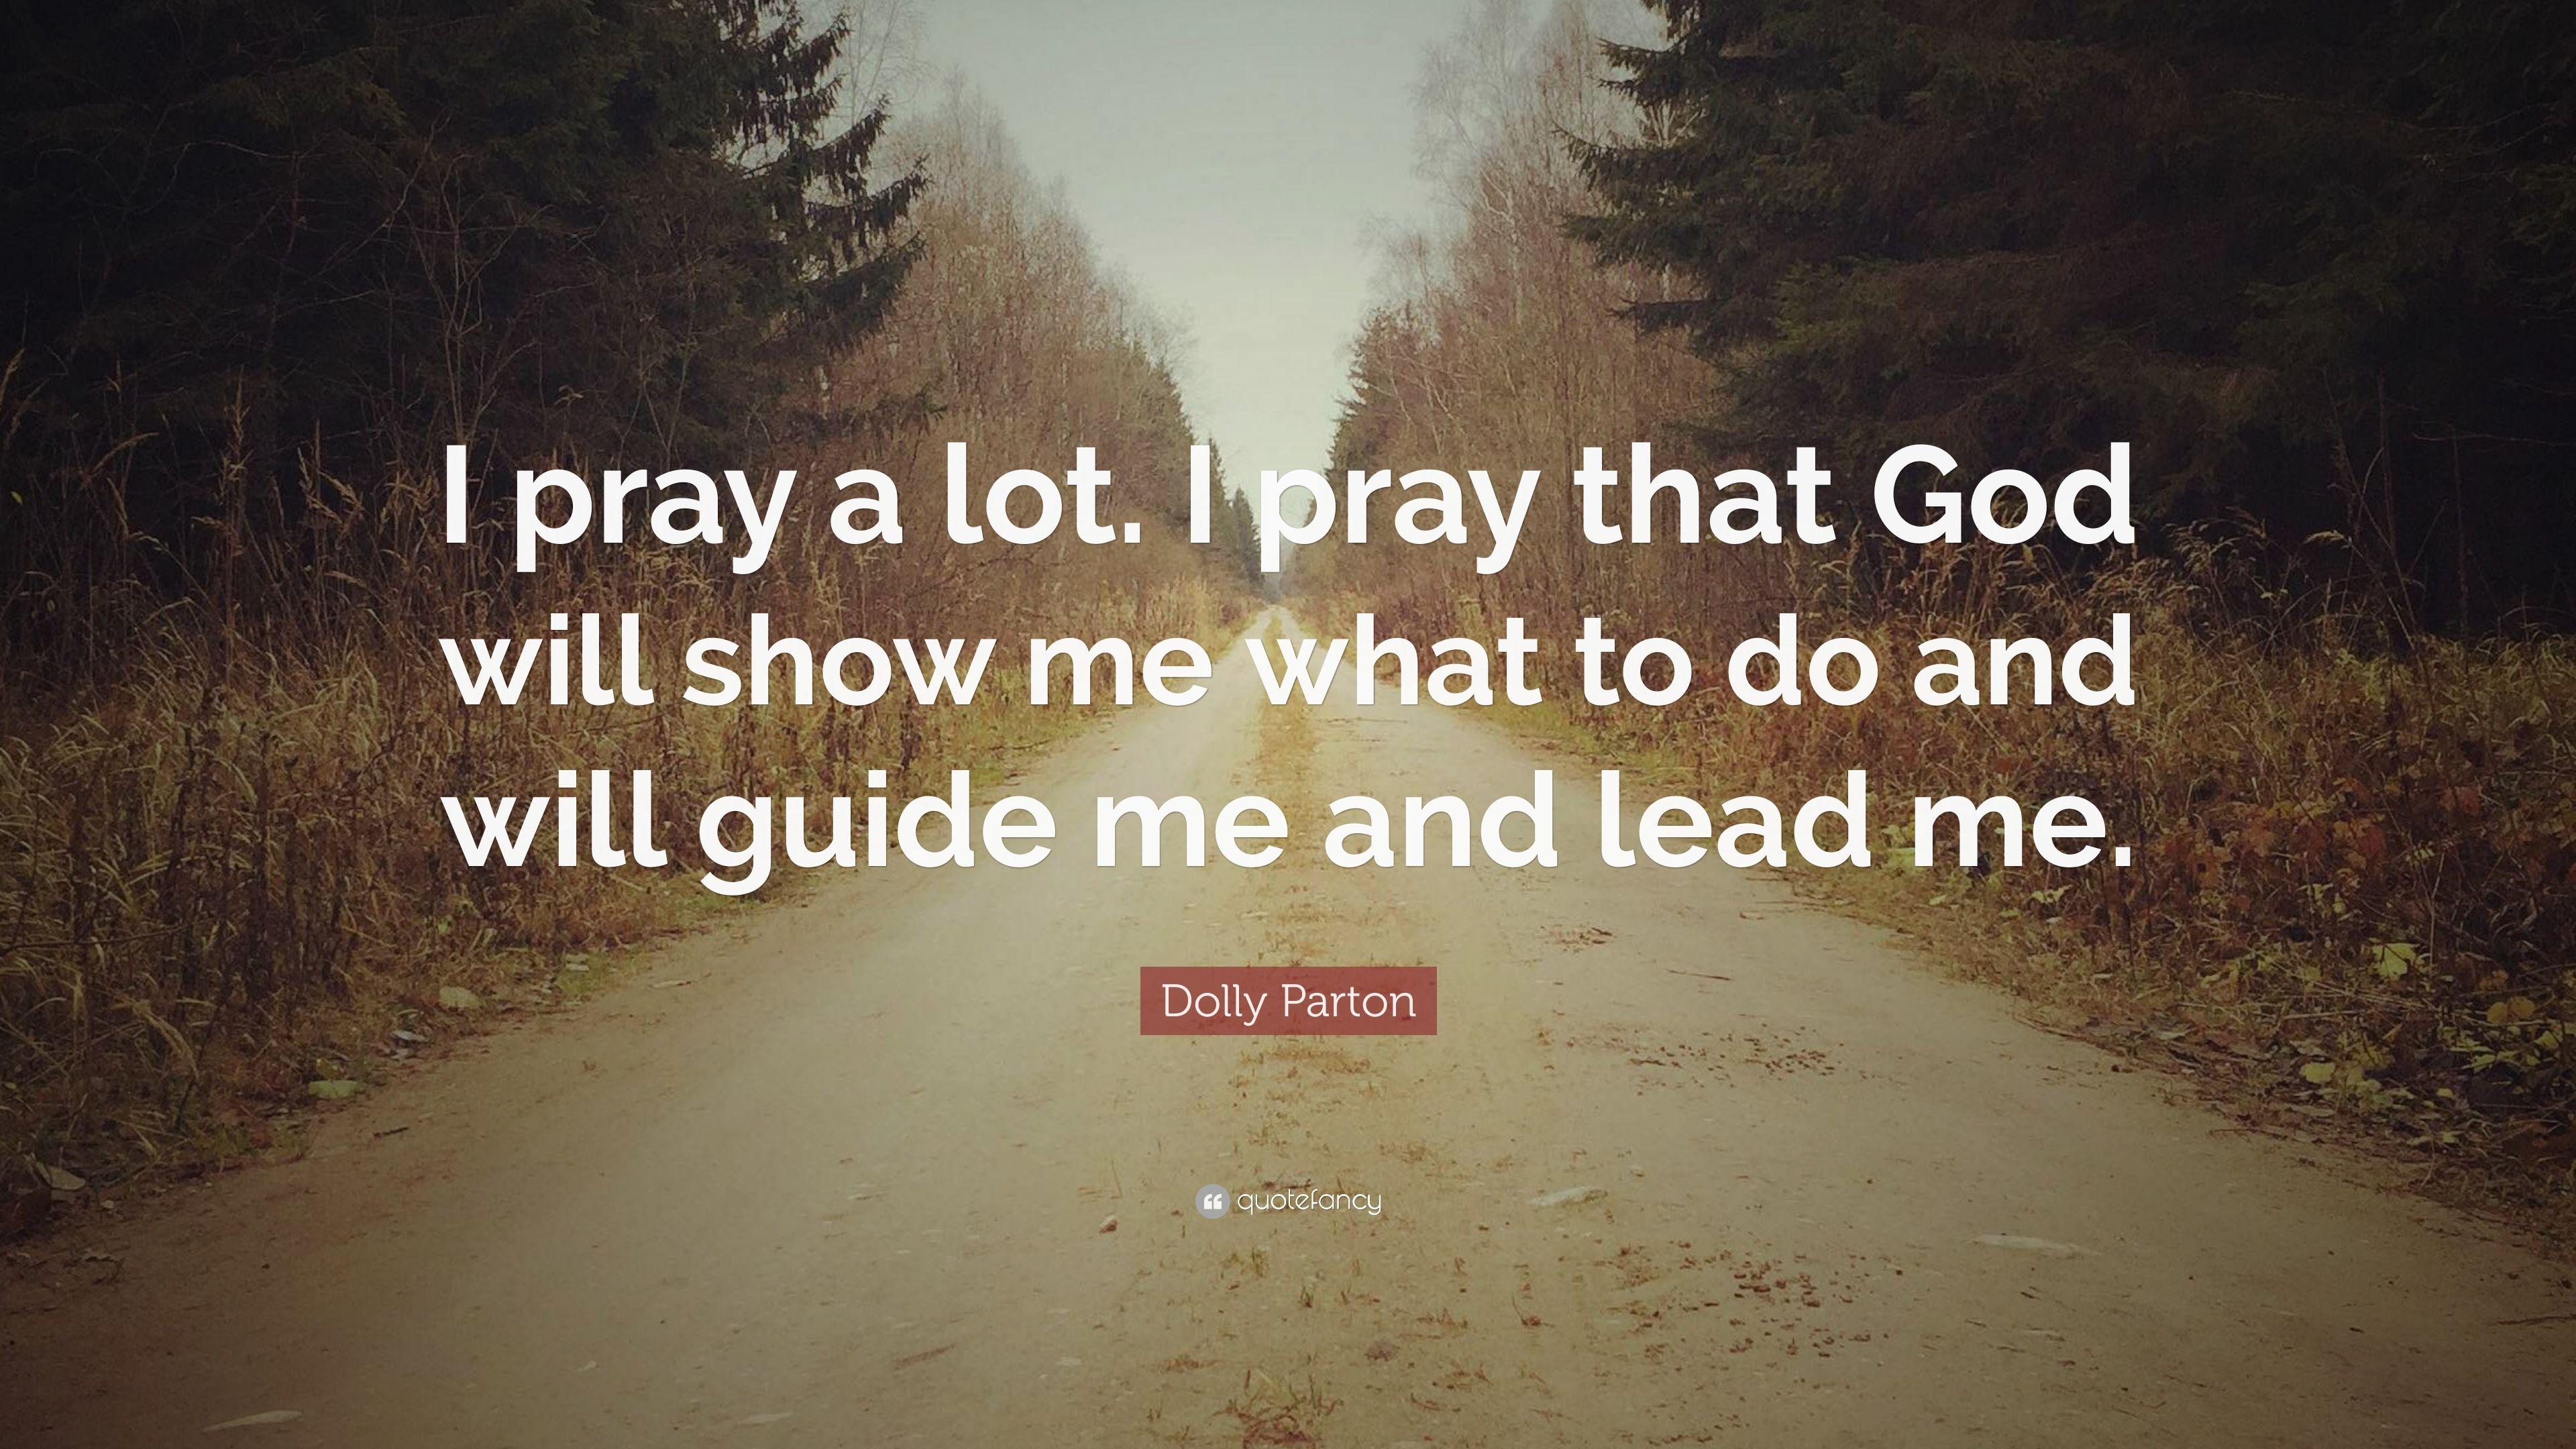 Dolly Parton Quote: “I pray a lot. I pray that God will show me